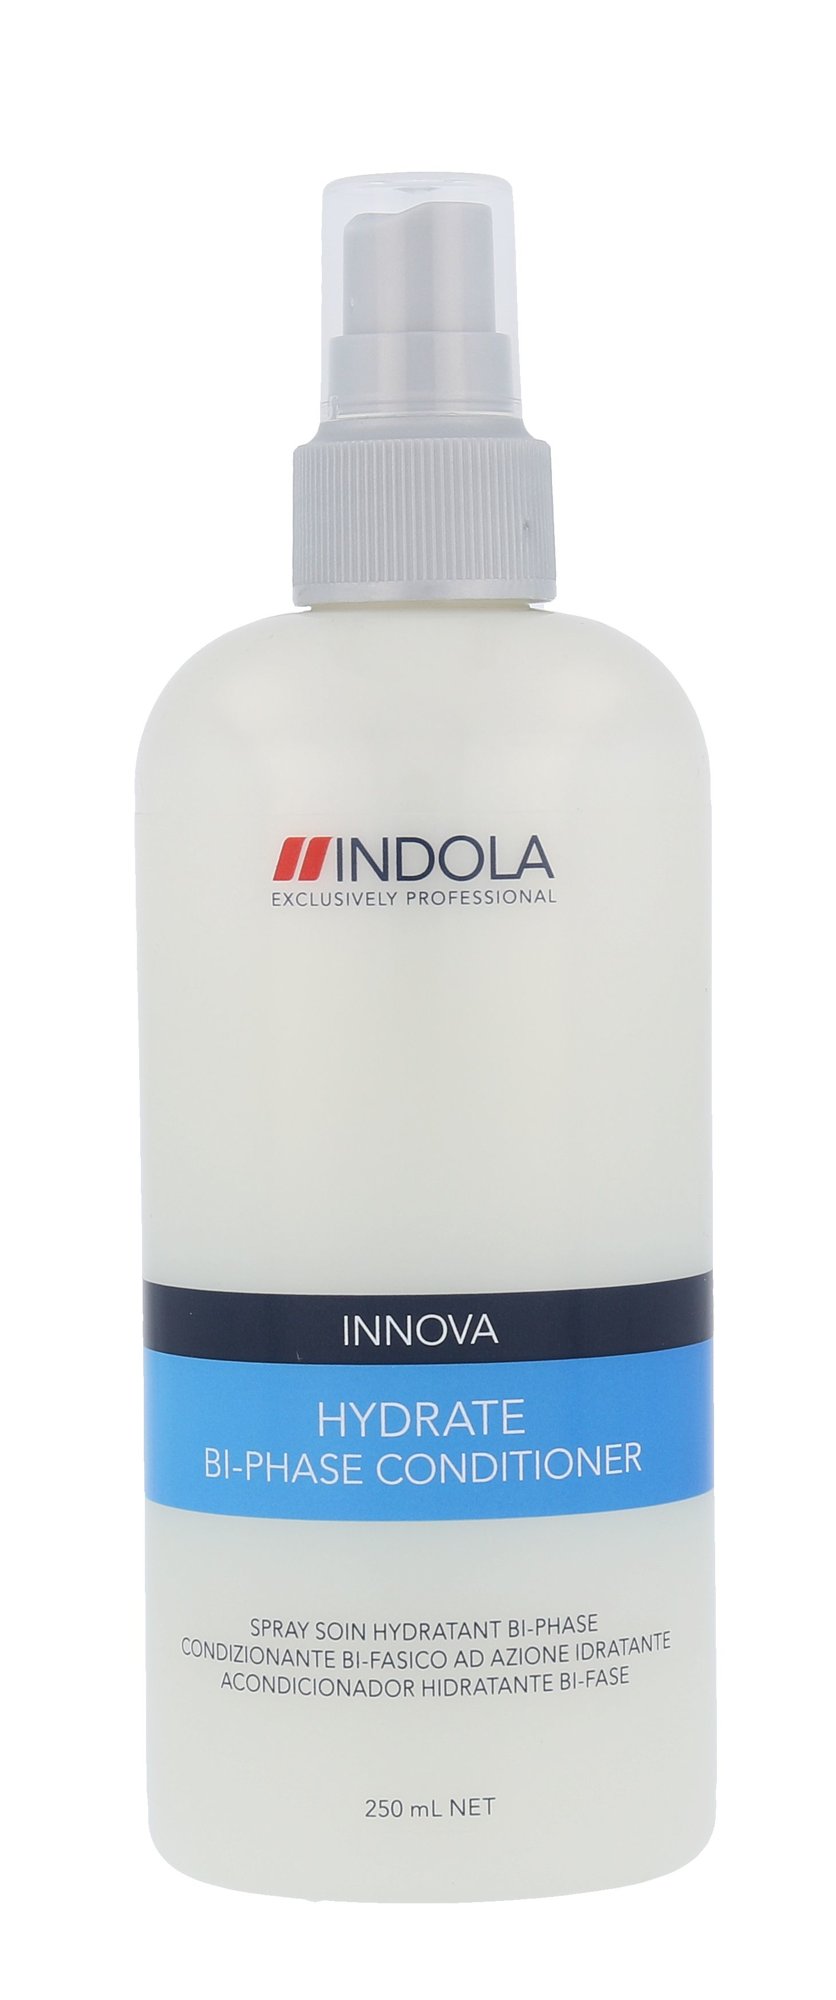 Indola Innova Hydrate Bi Phase Conditioner